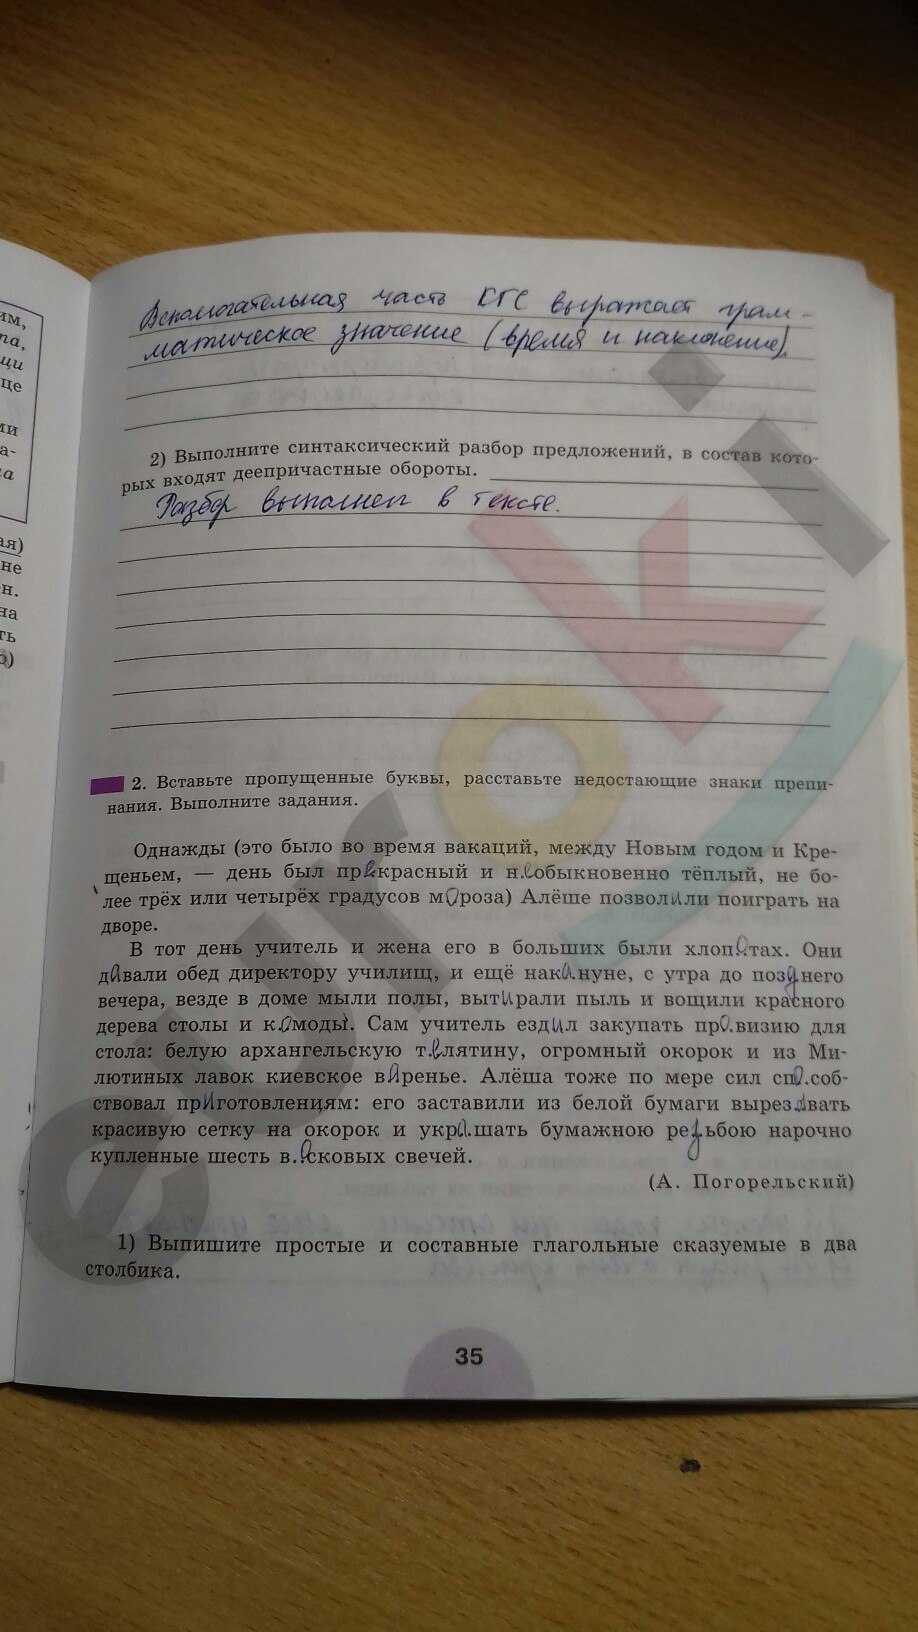 гдз 8 класс рабочая тетрадь часть 1 страница 35 русский язык Рыбченкова, Александрова